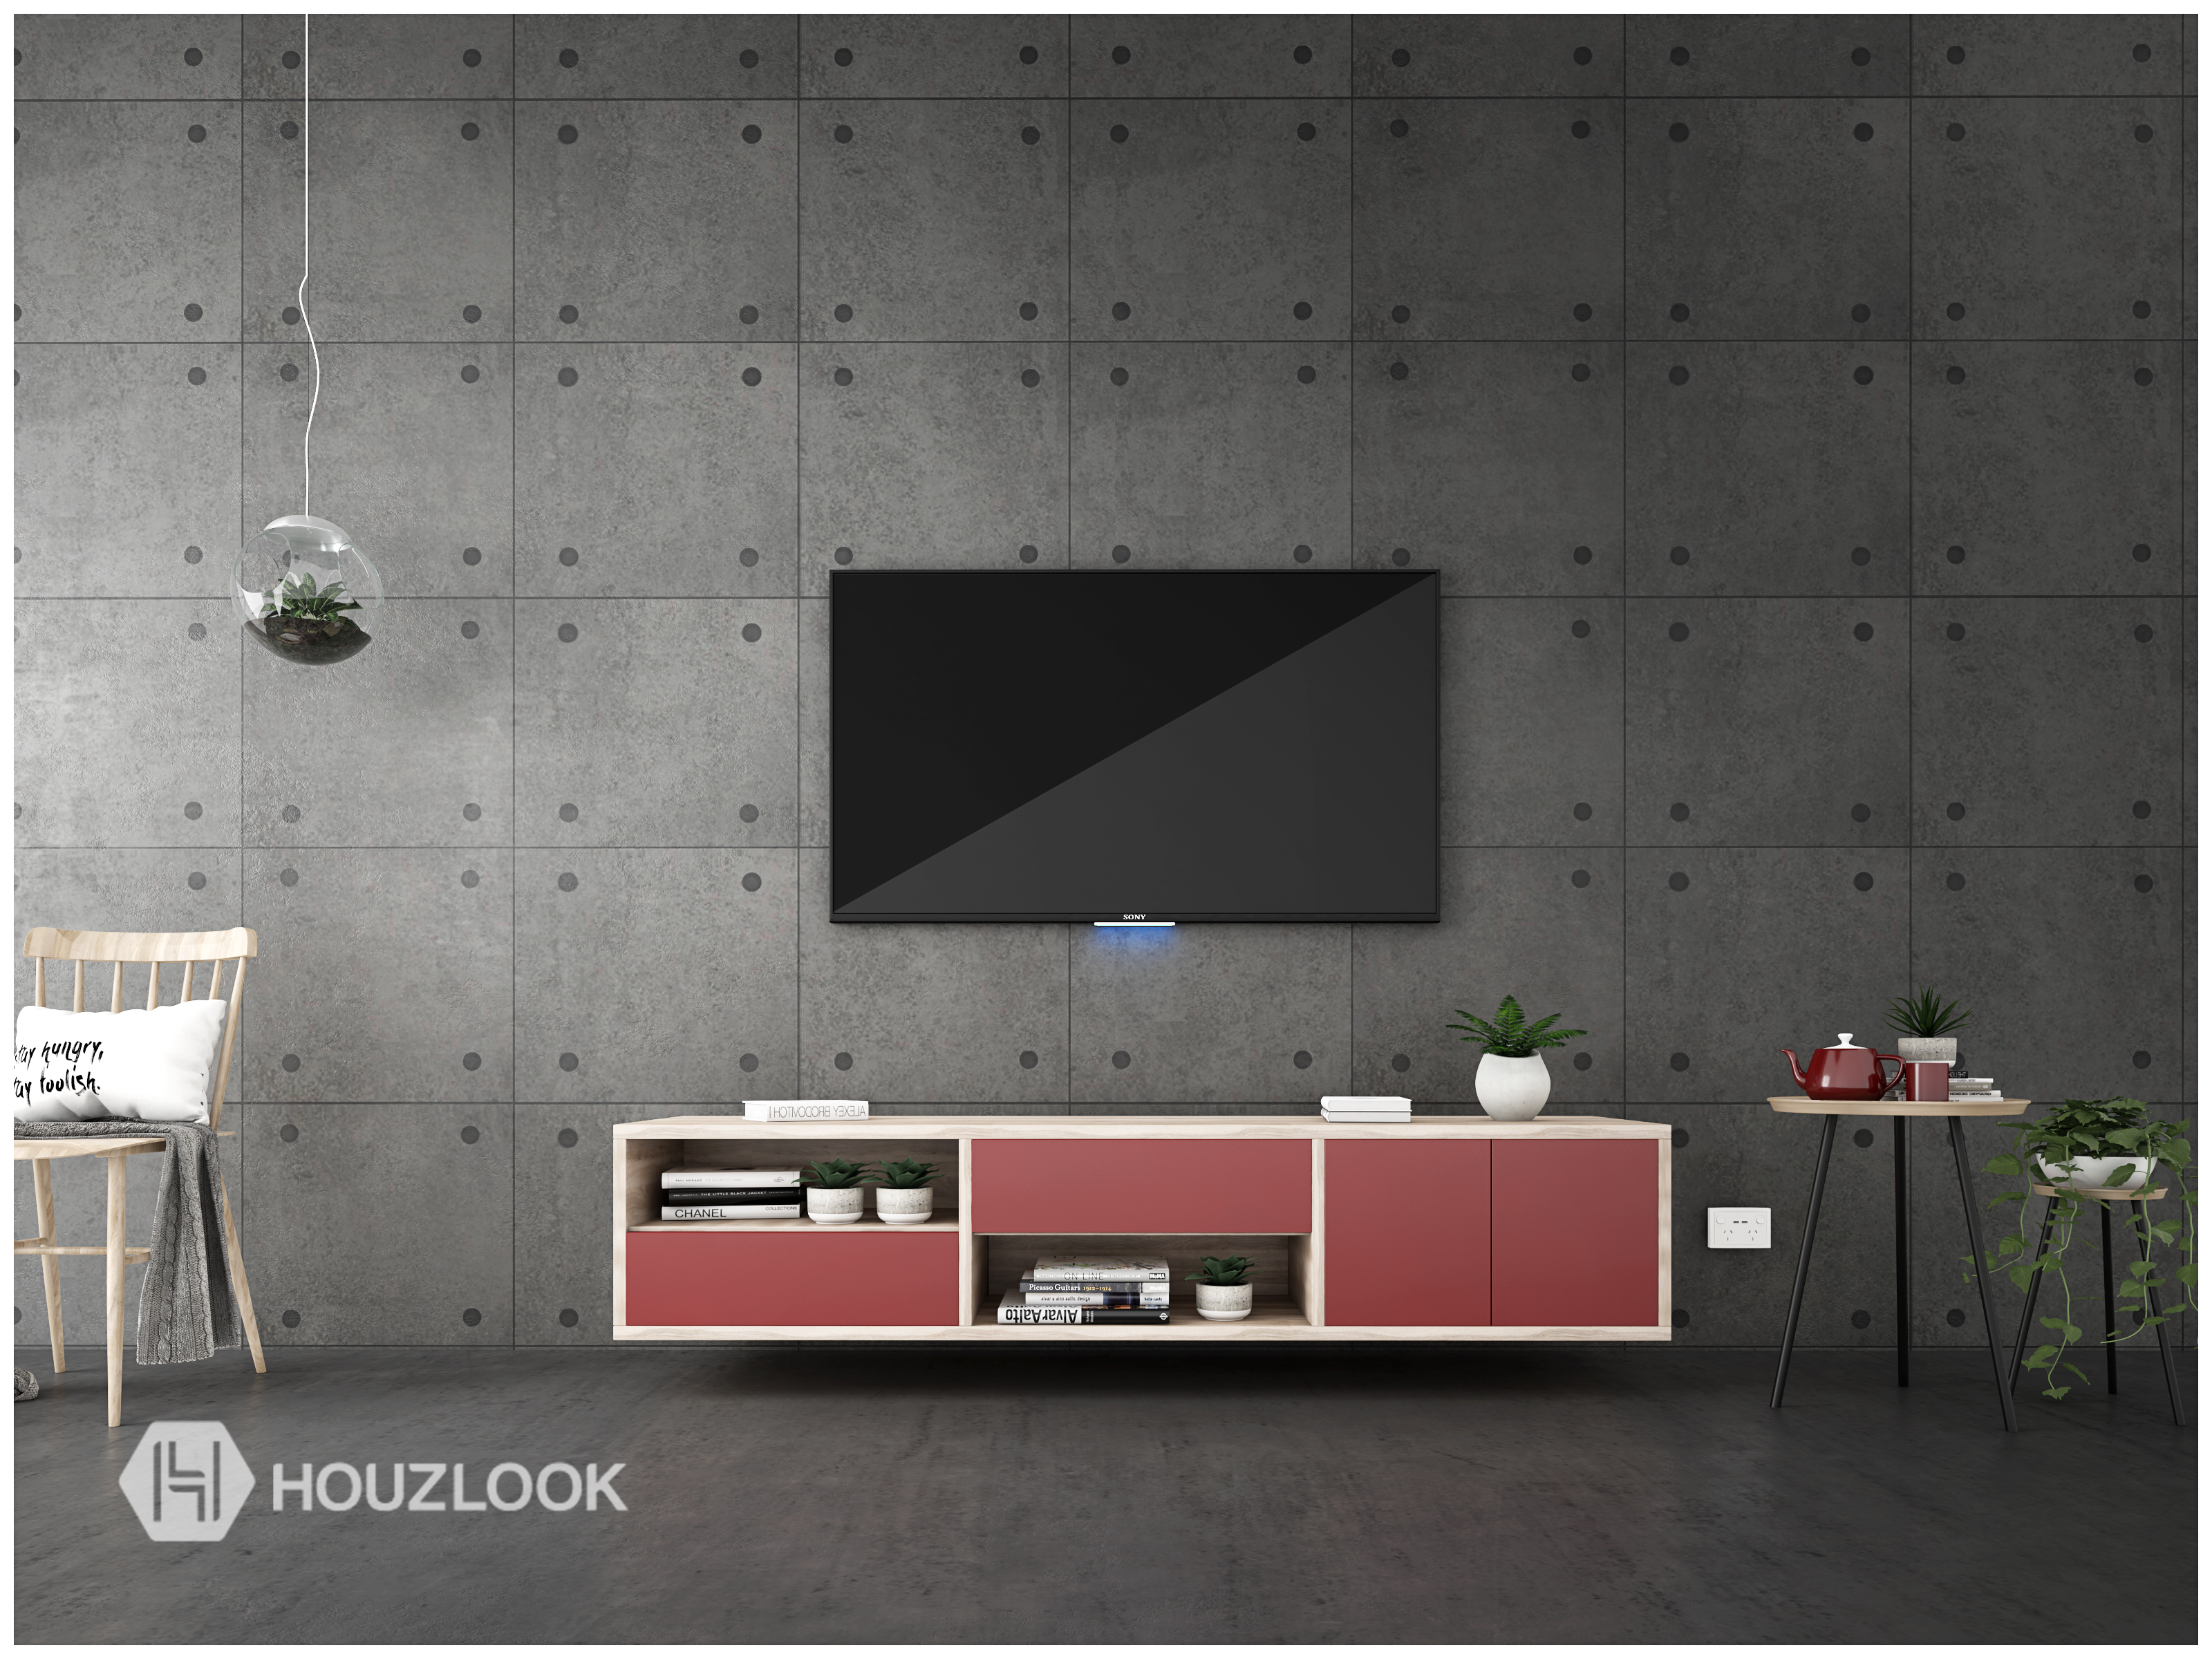 6'x6'-Thetford-wall-mounted-Tv-unit | Houzlook